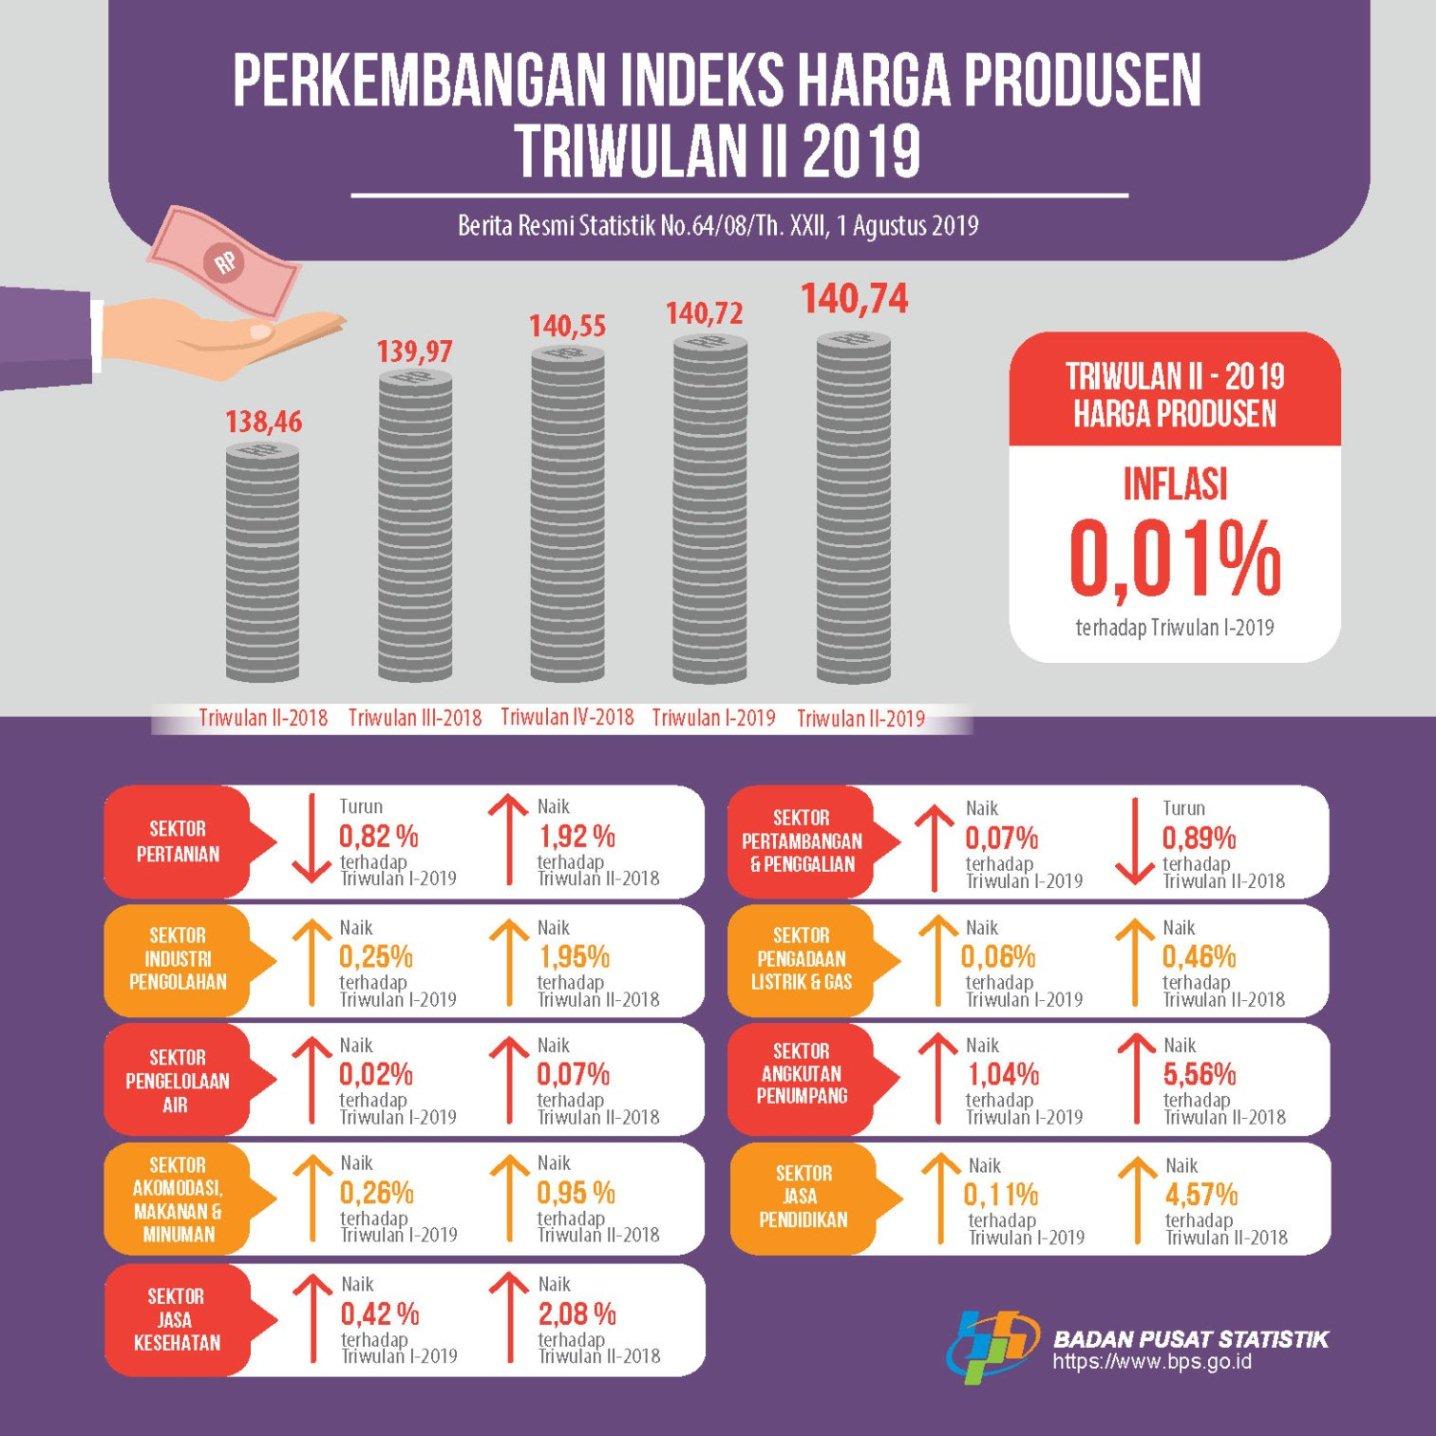 Producer Price Index (PPI) for Quarter II-2019 Increases 0.01 Percent Against Quarter I-2019